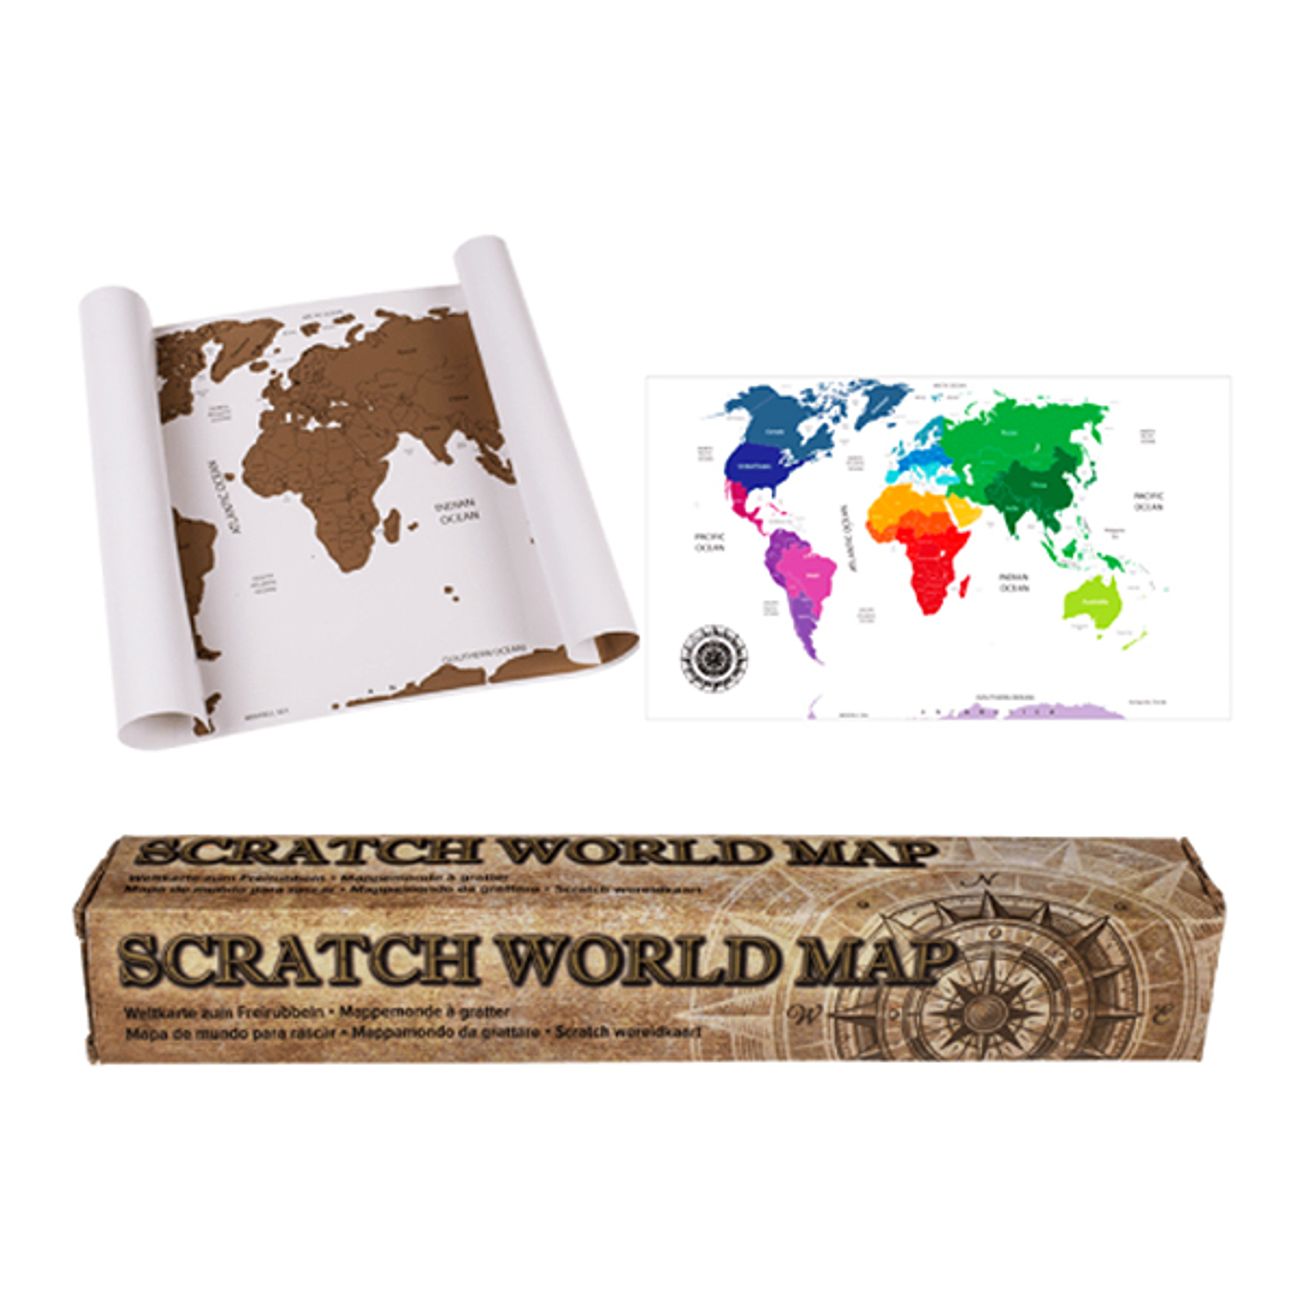 scratch-world-map-original-74870-1